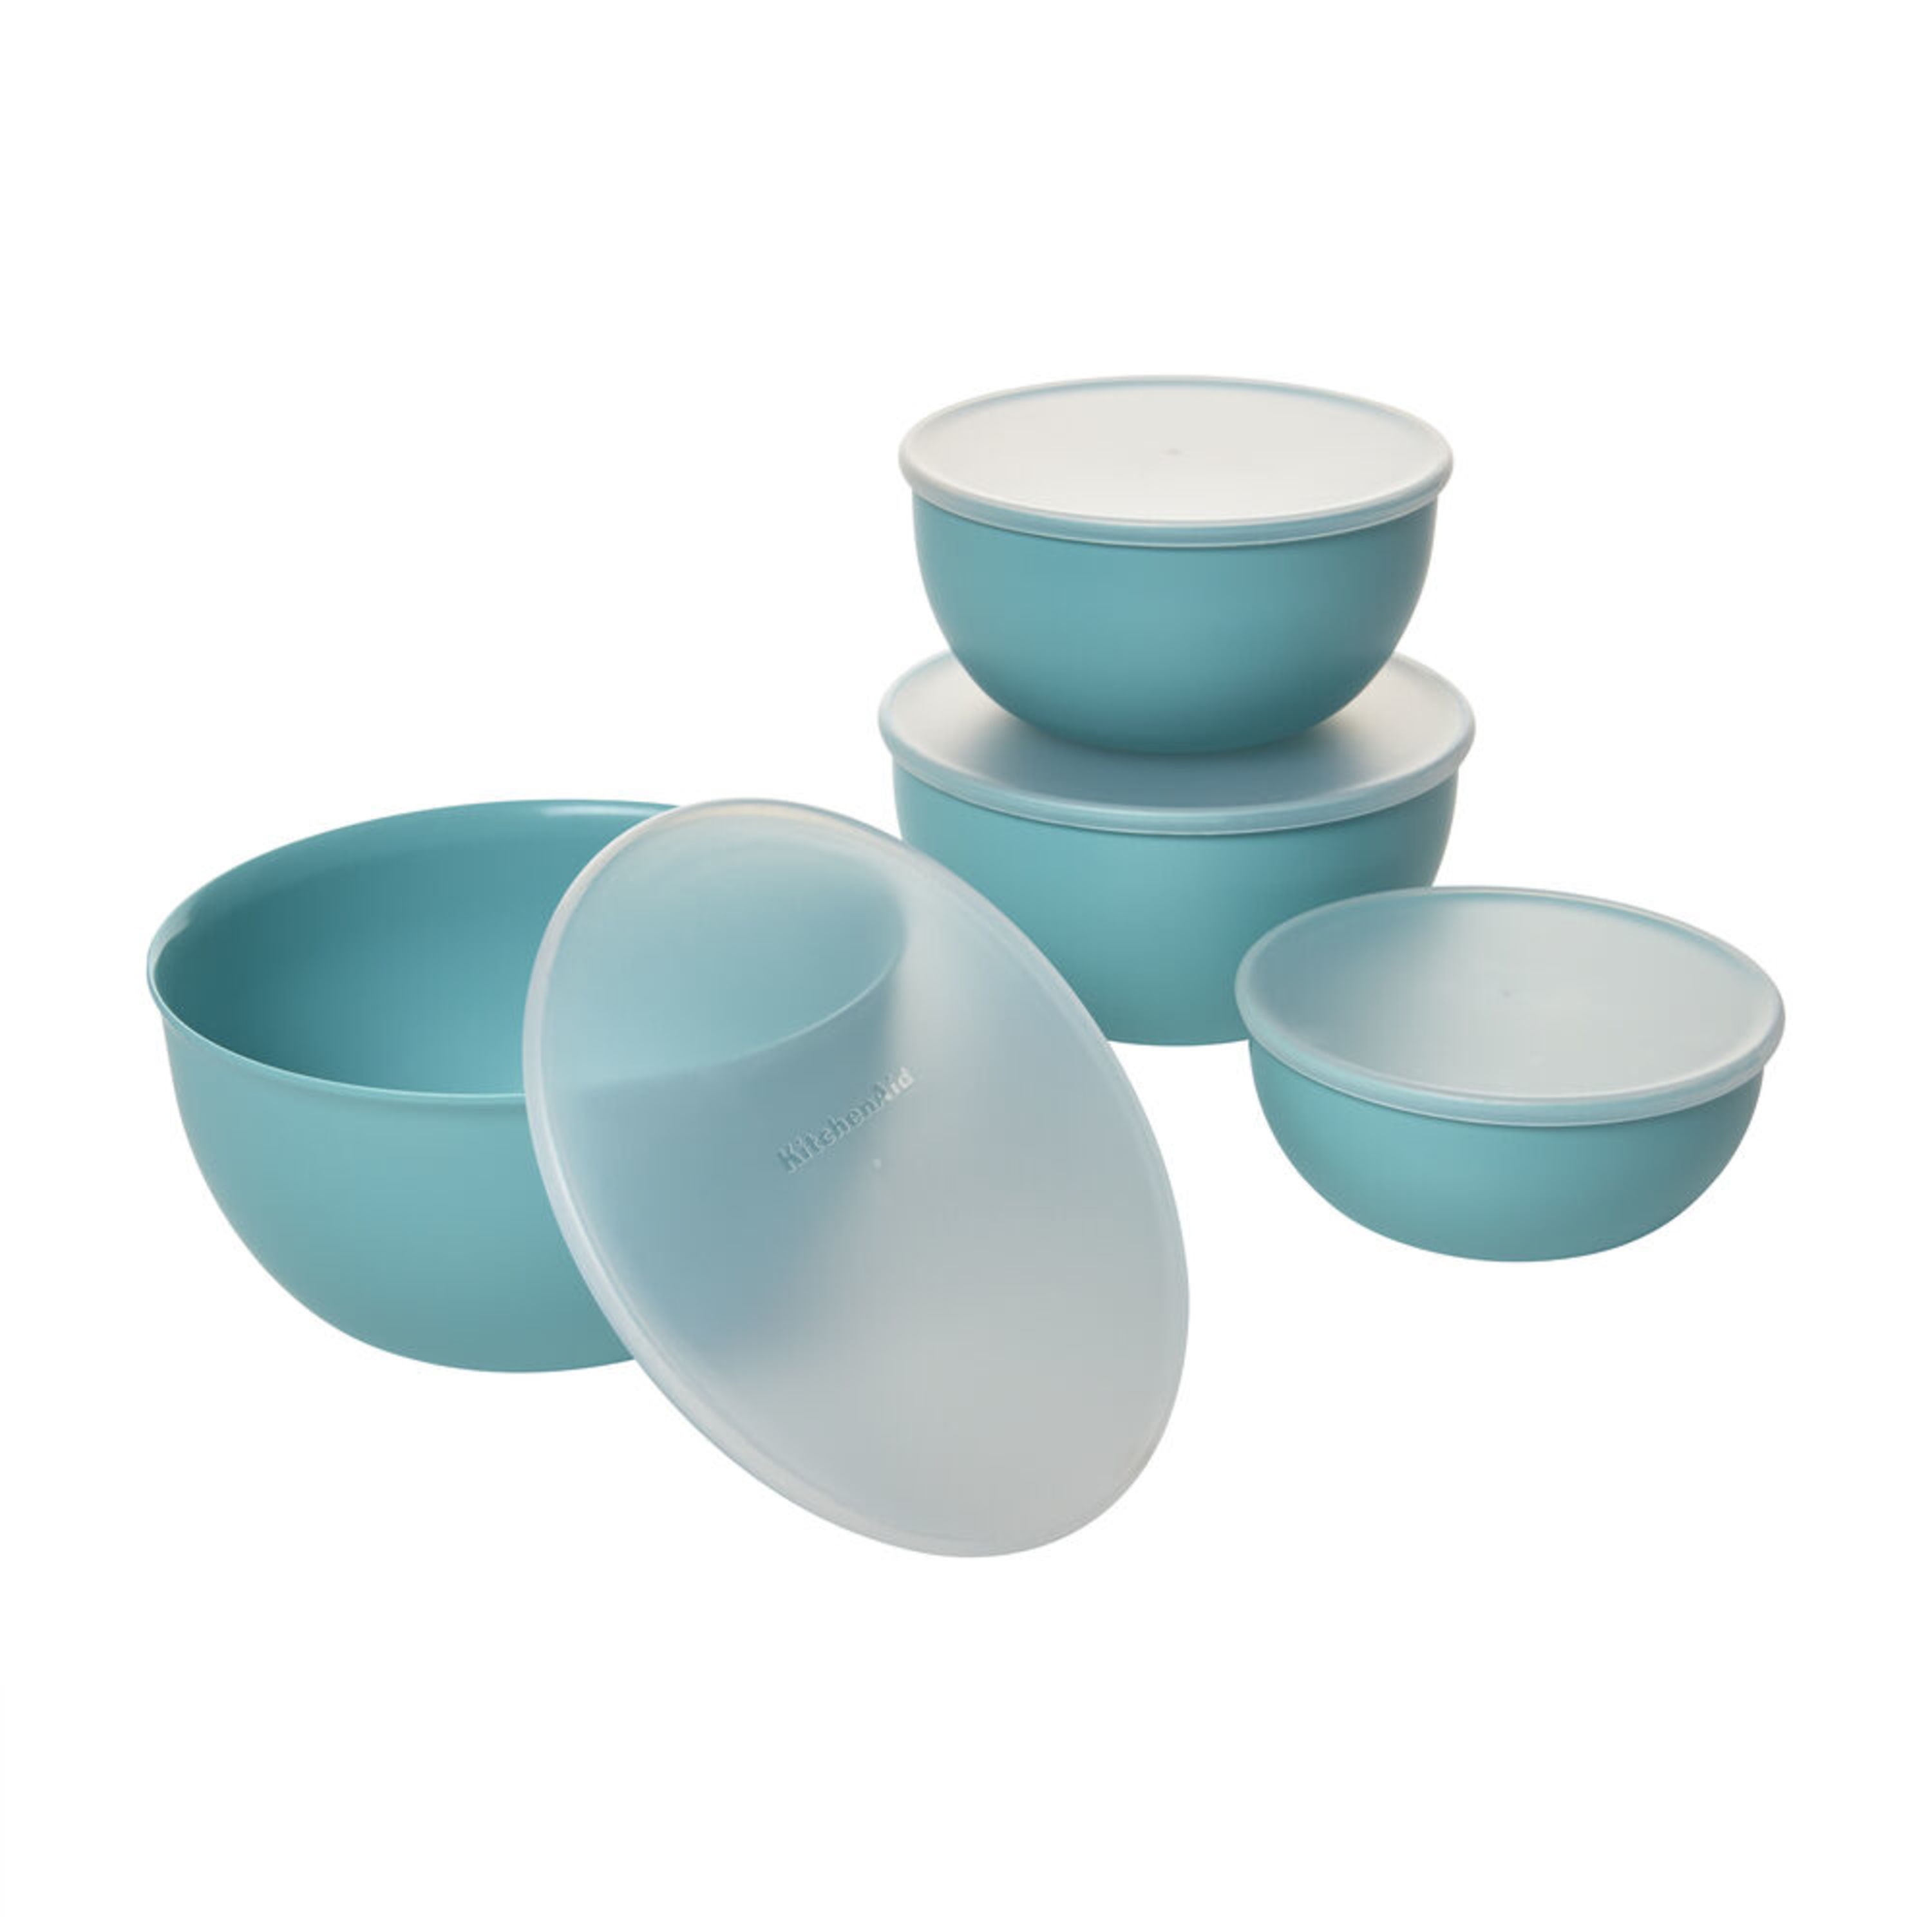  KitchenAid Classic Mixing Bowls, Set of 5, Aqua Sky 2 & Gourmet  Utility Whisk, 10.5-Inch, Matte Aqua Sky : Clothing, Shoes & Jewelry